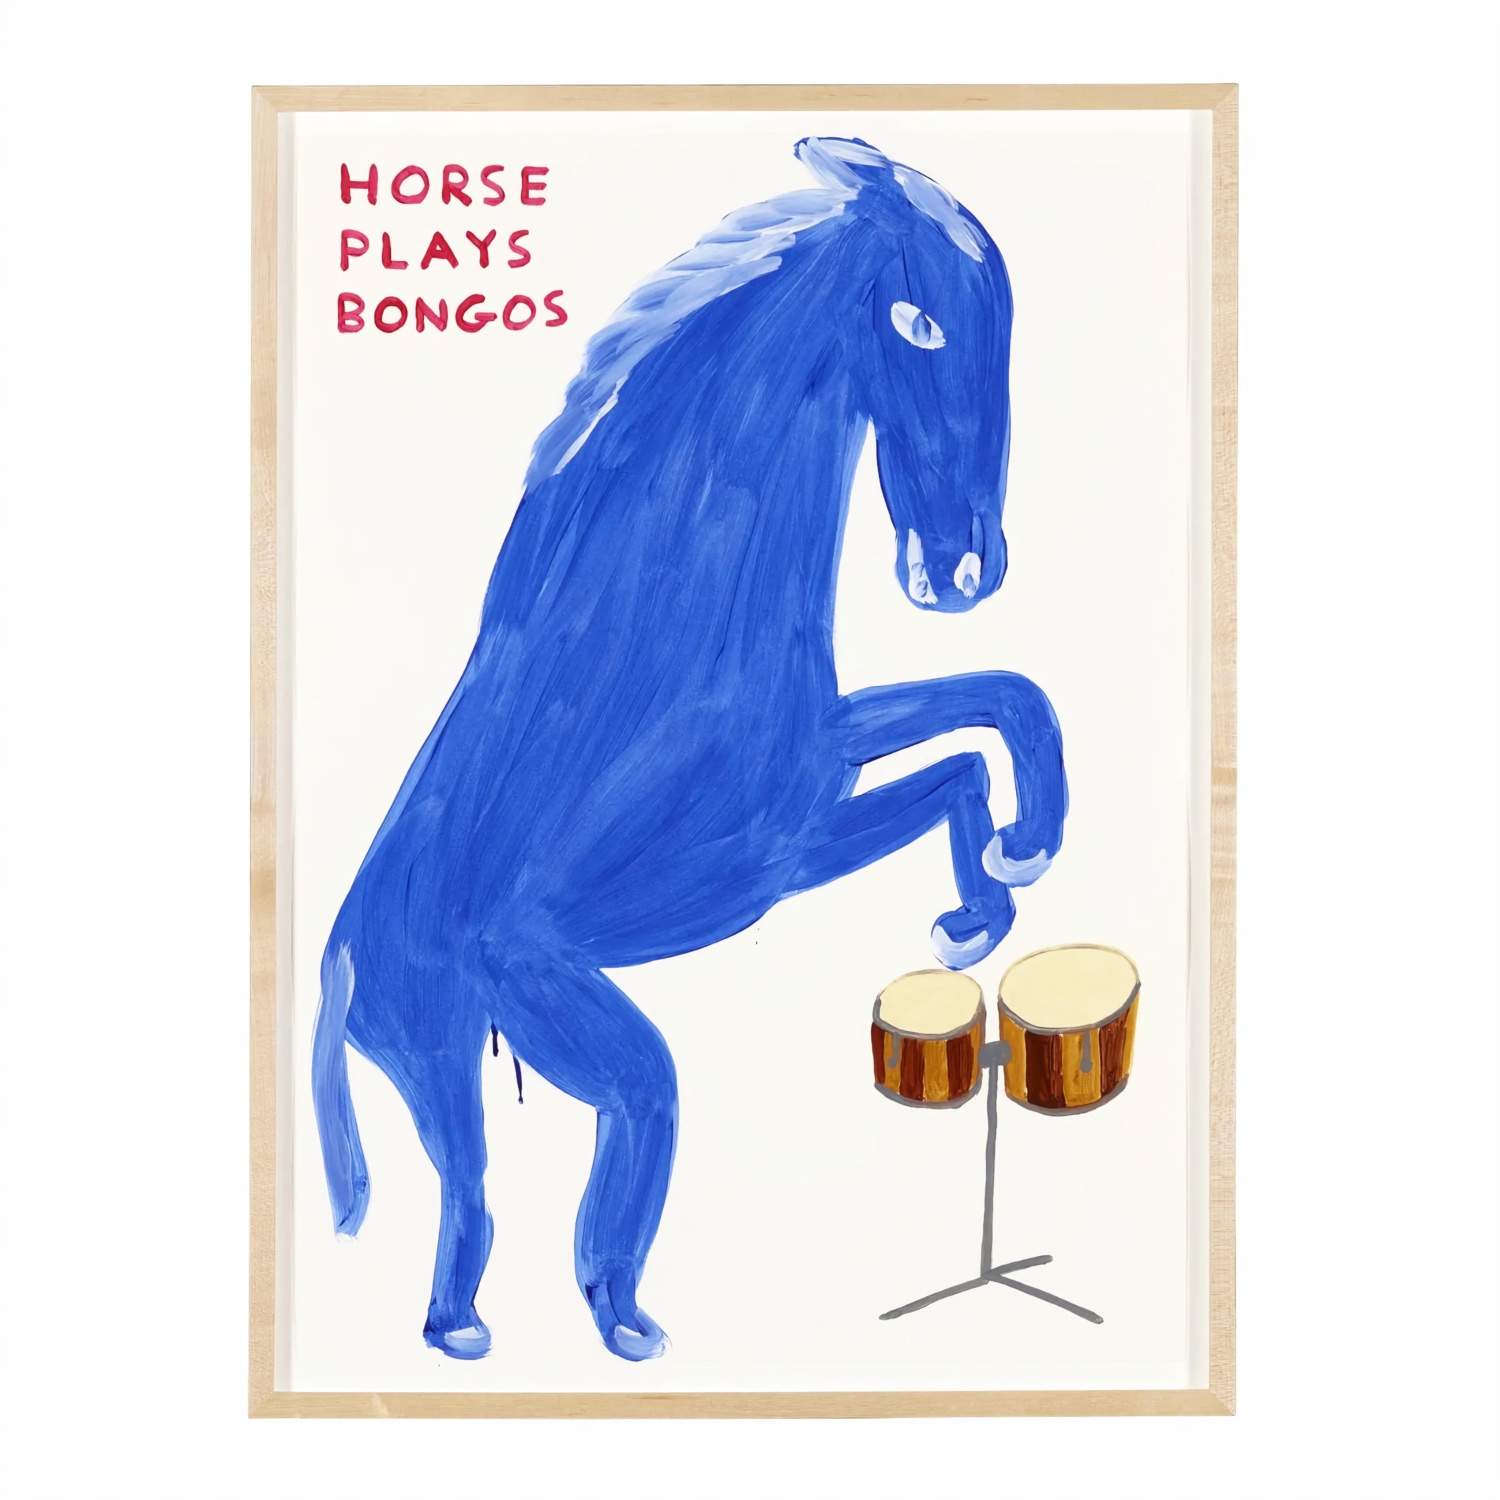 David Shrigley - Horse plays bongos